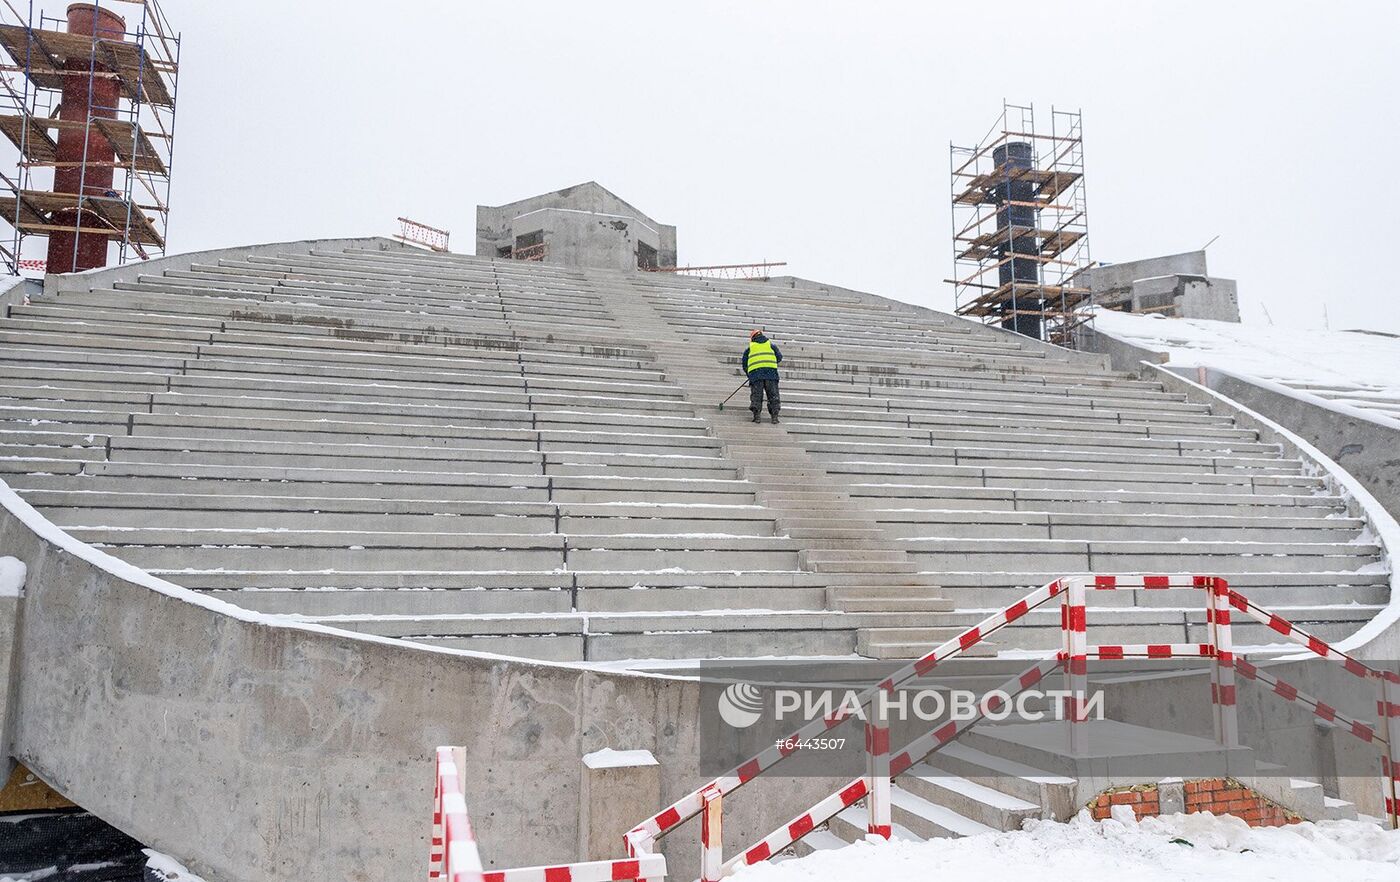 Реконструкция стадиона "Москвич"